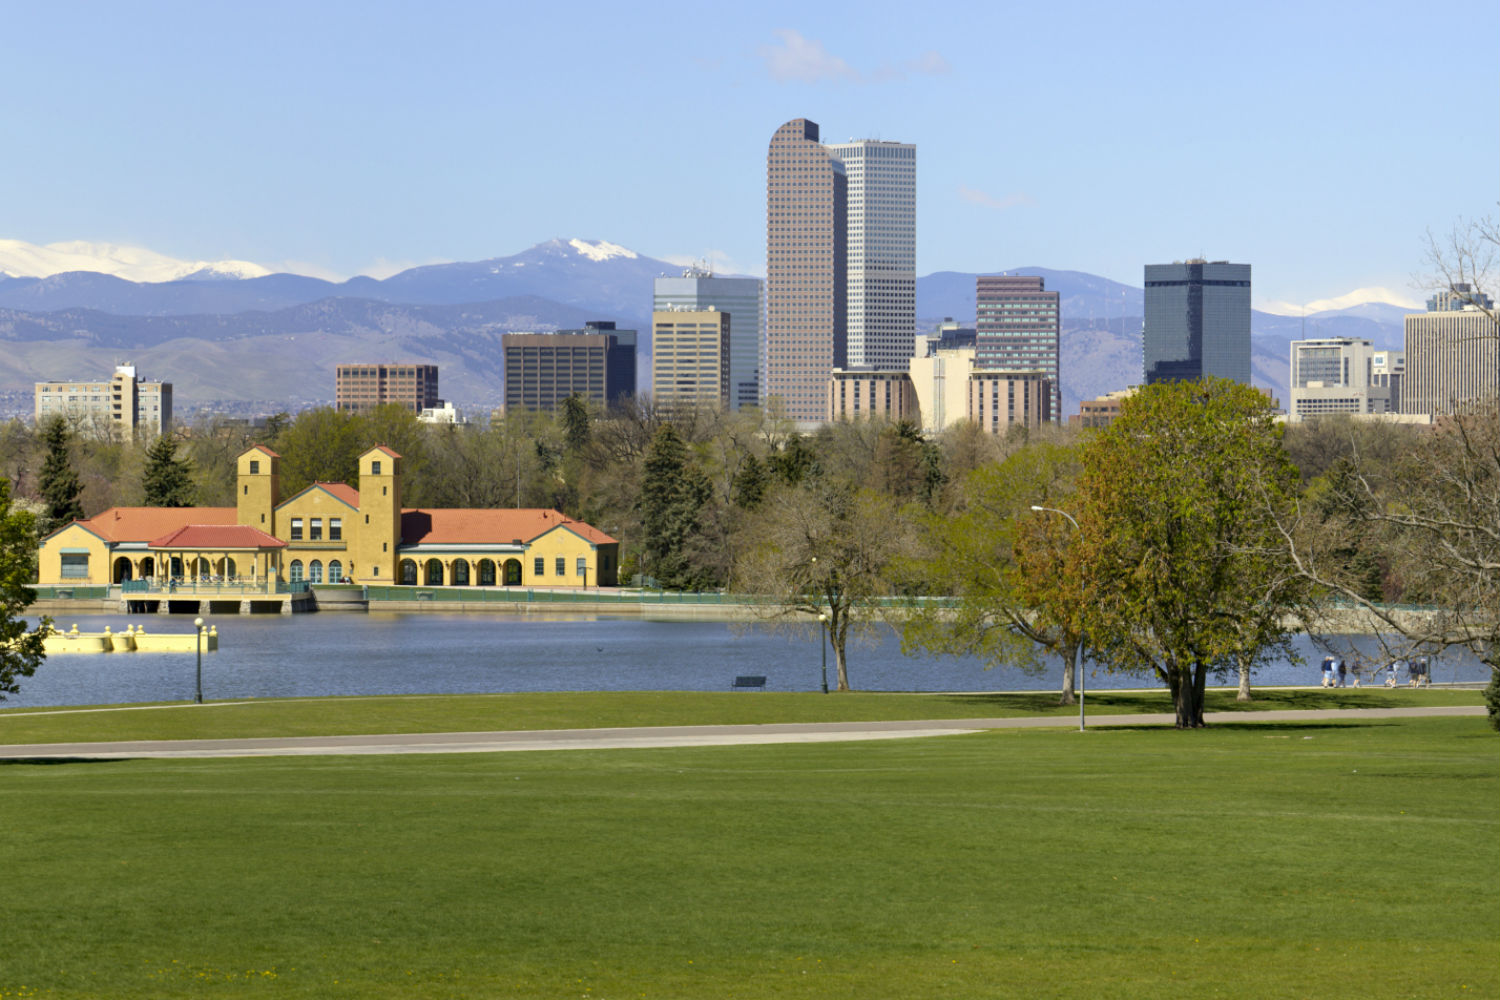 Denver's skyline, as seen from City Park. (Jupiter Images)